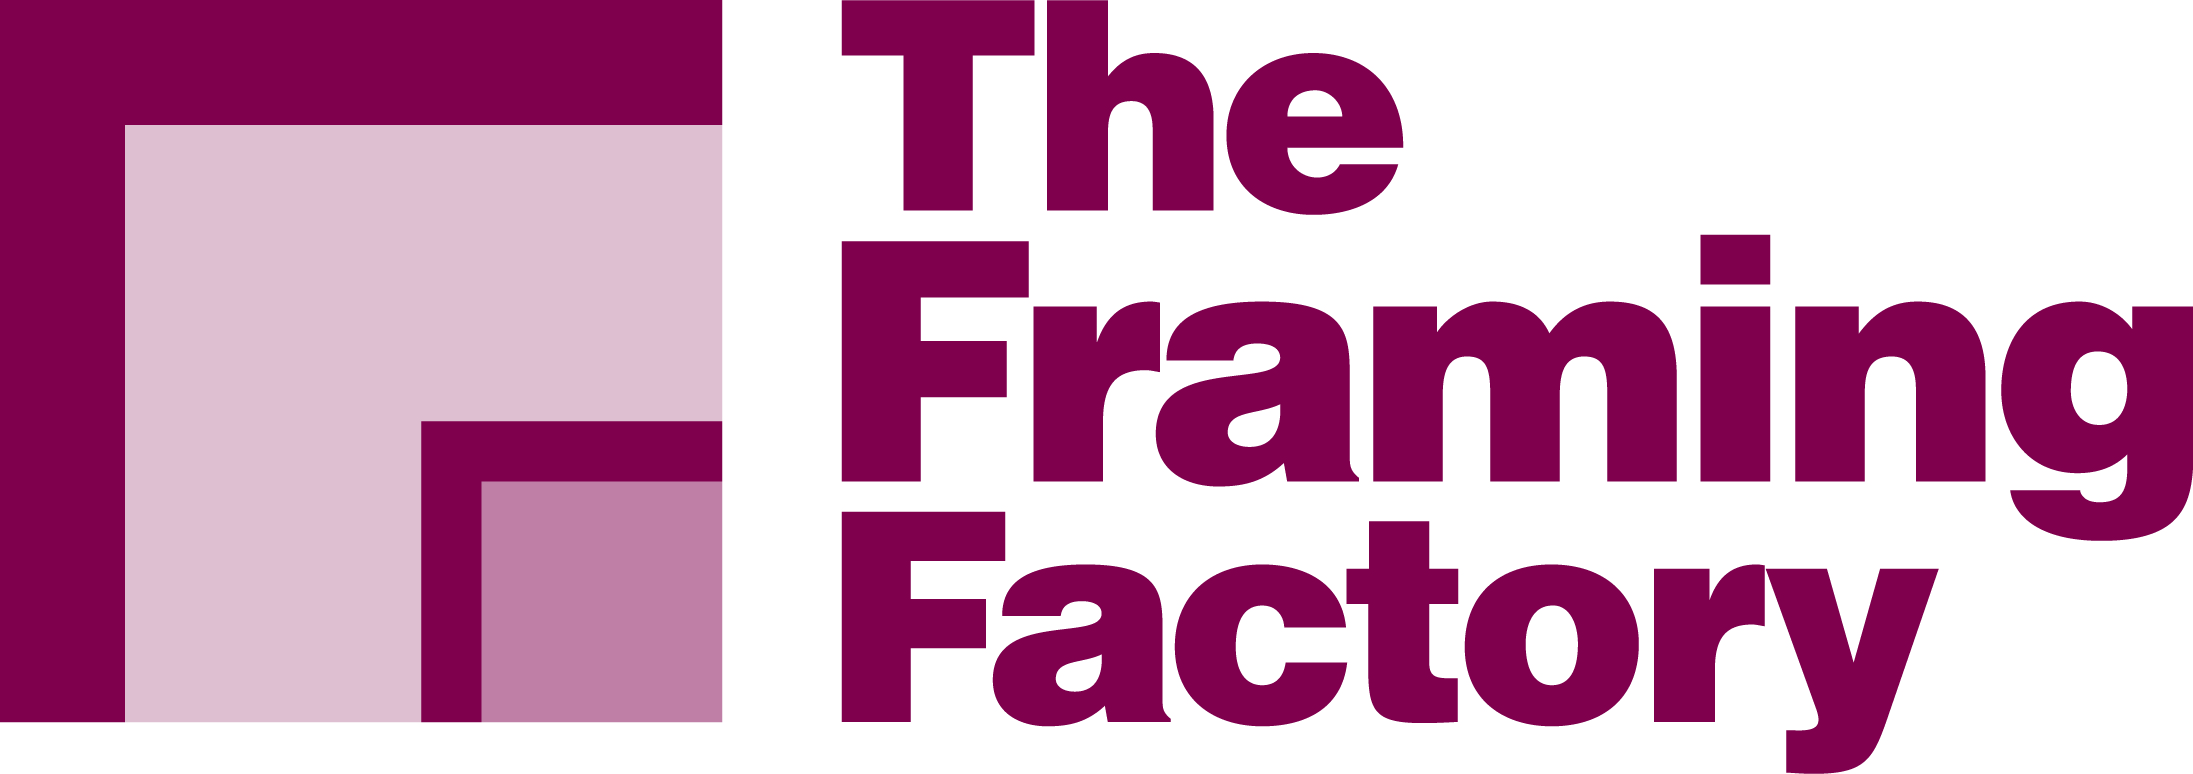 ff logo 3.jpg